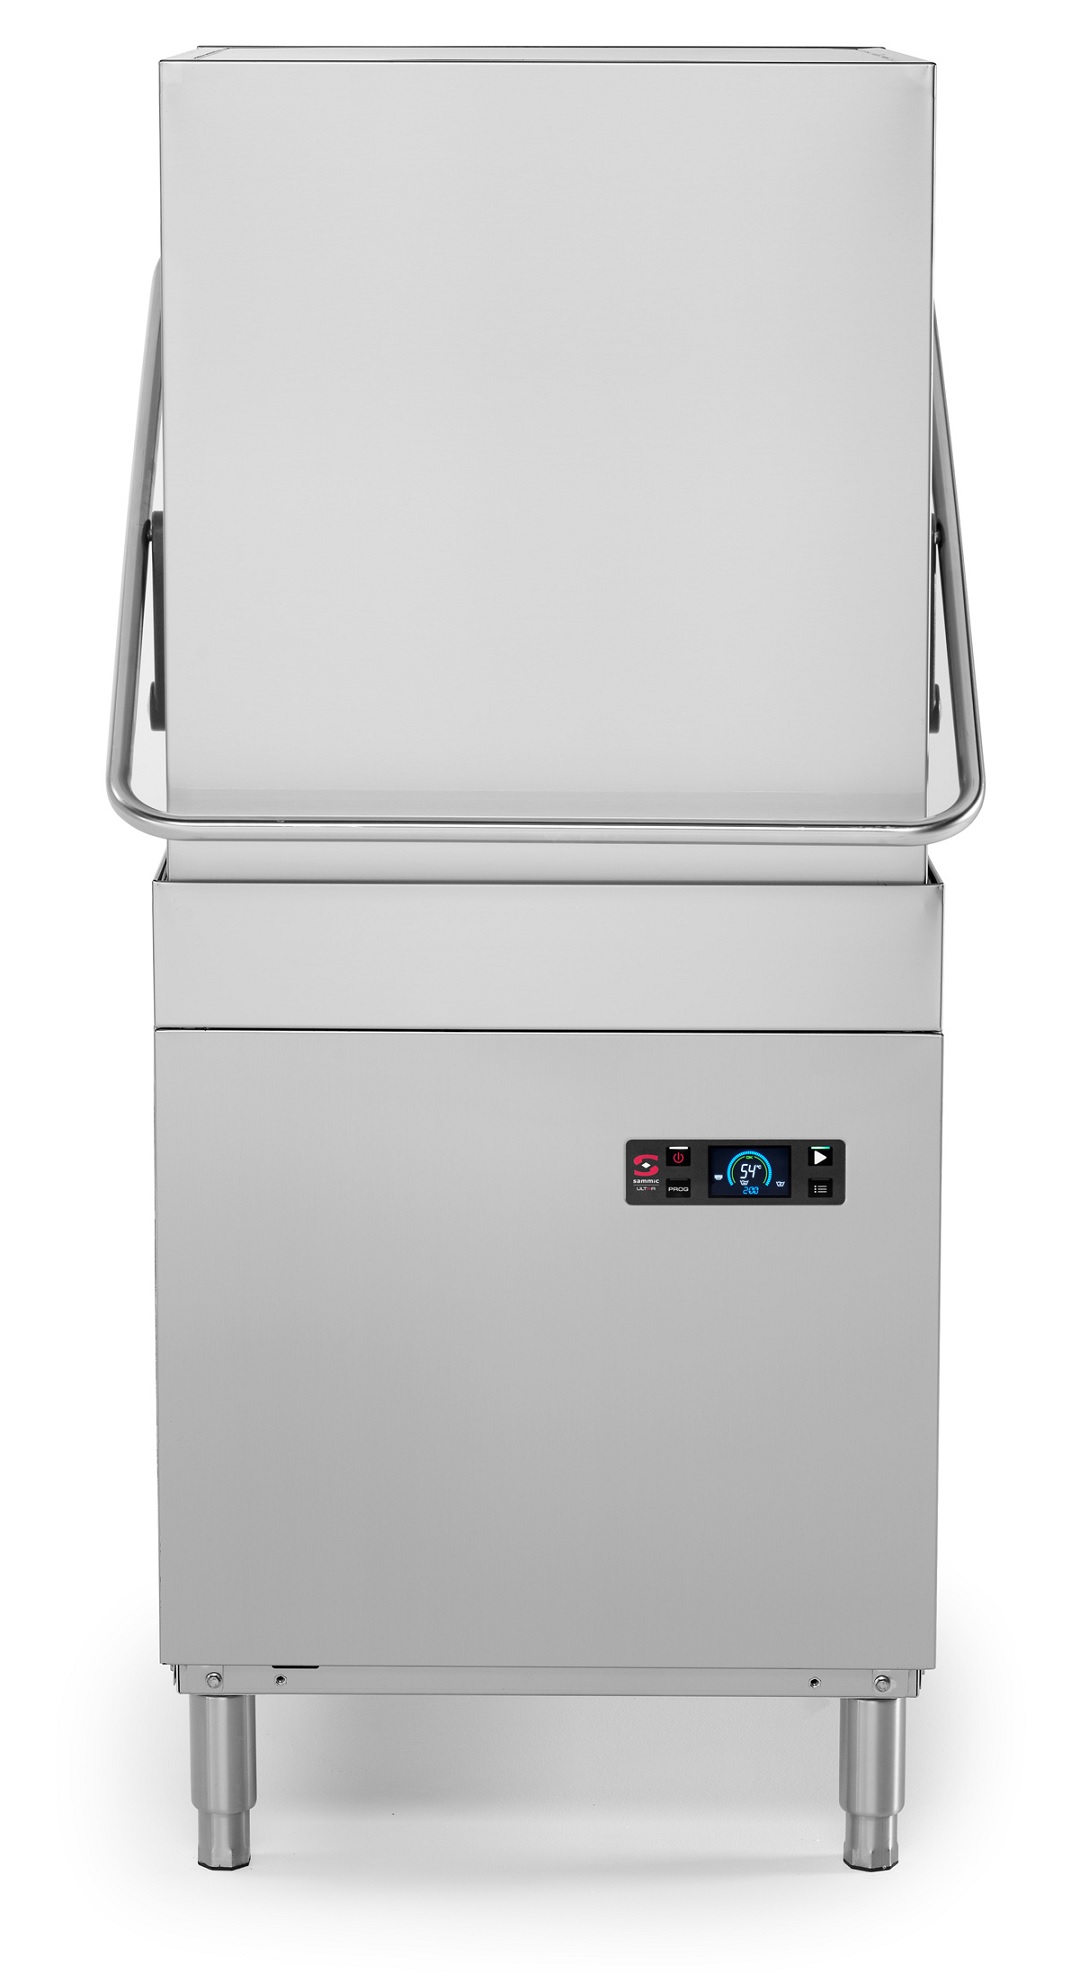 Sammic AX-100BC Pass-Through Dishwasher